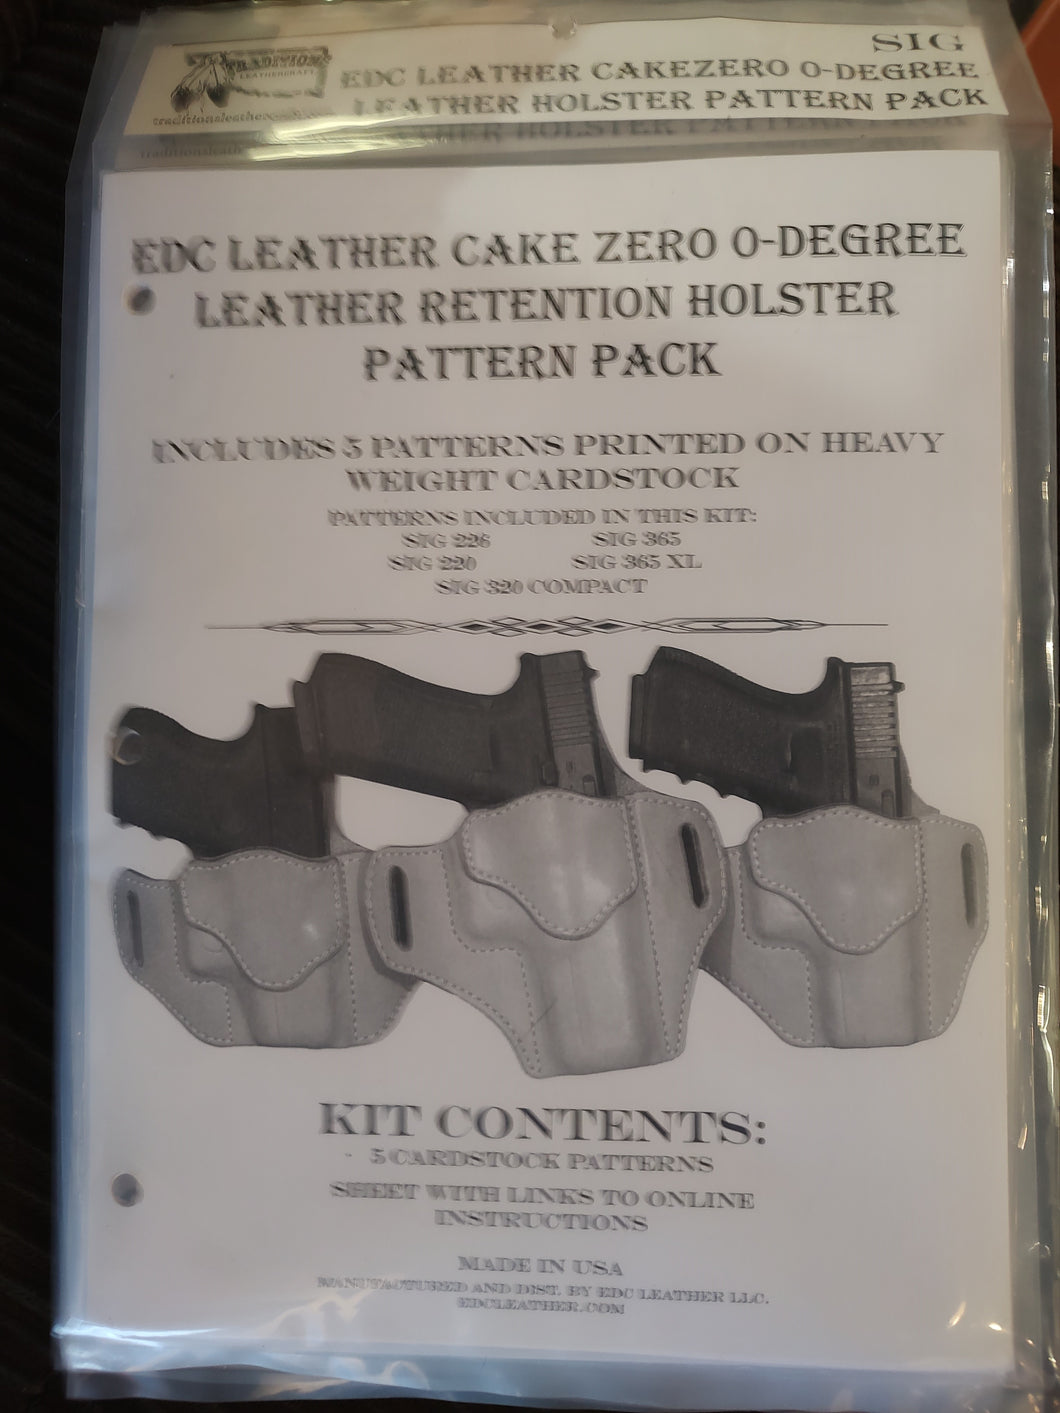 EDC Cake Zero 0-Degree Leather Retention Holster Pattern Pack